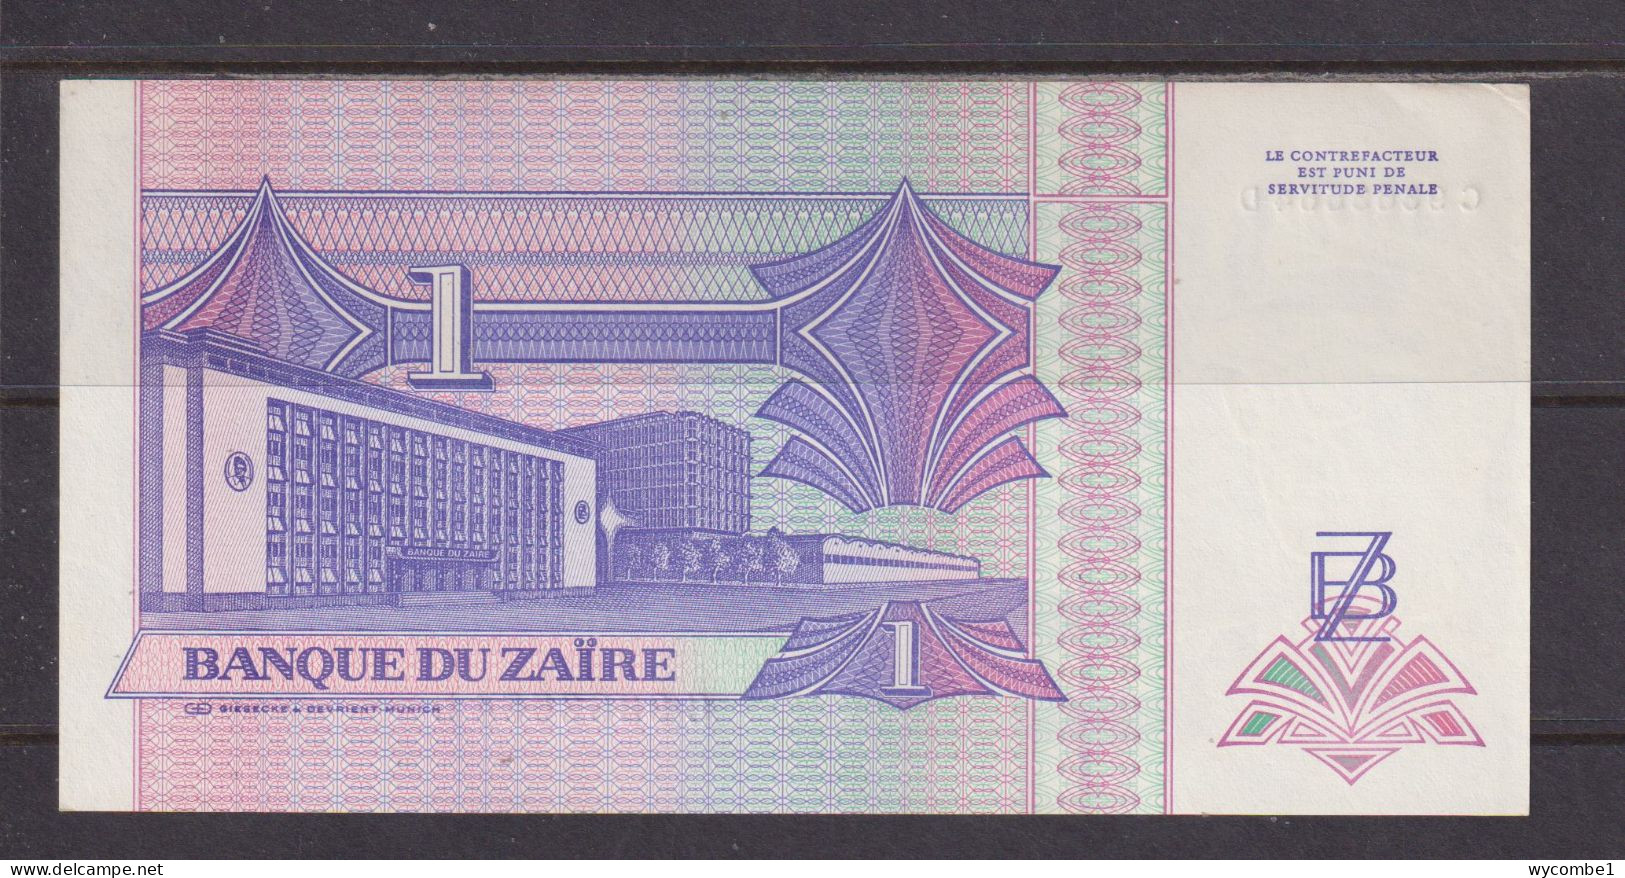 ZAIRE - 1993 1 New Zaire  Circulated Banknote As Scans - Zaïre